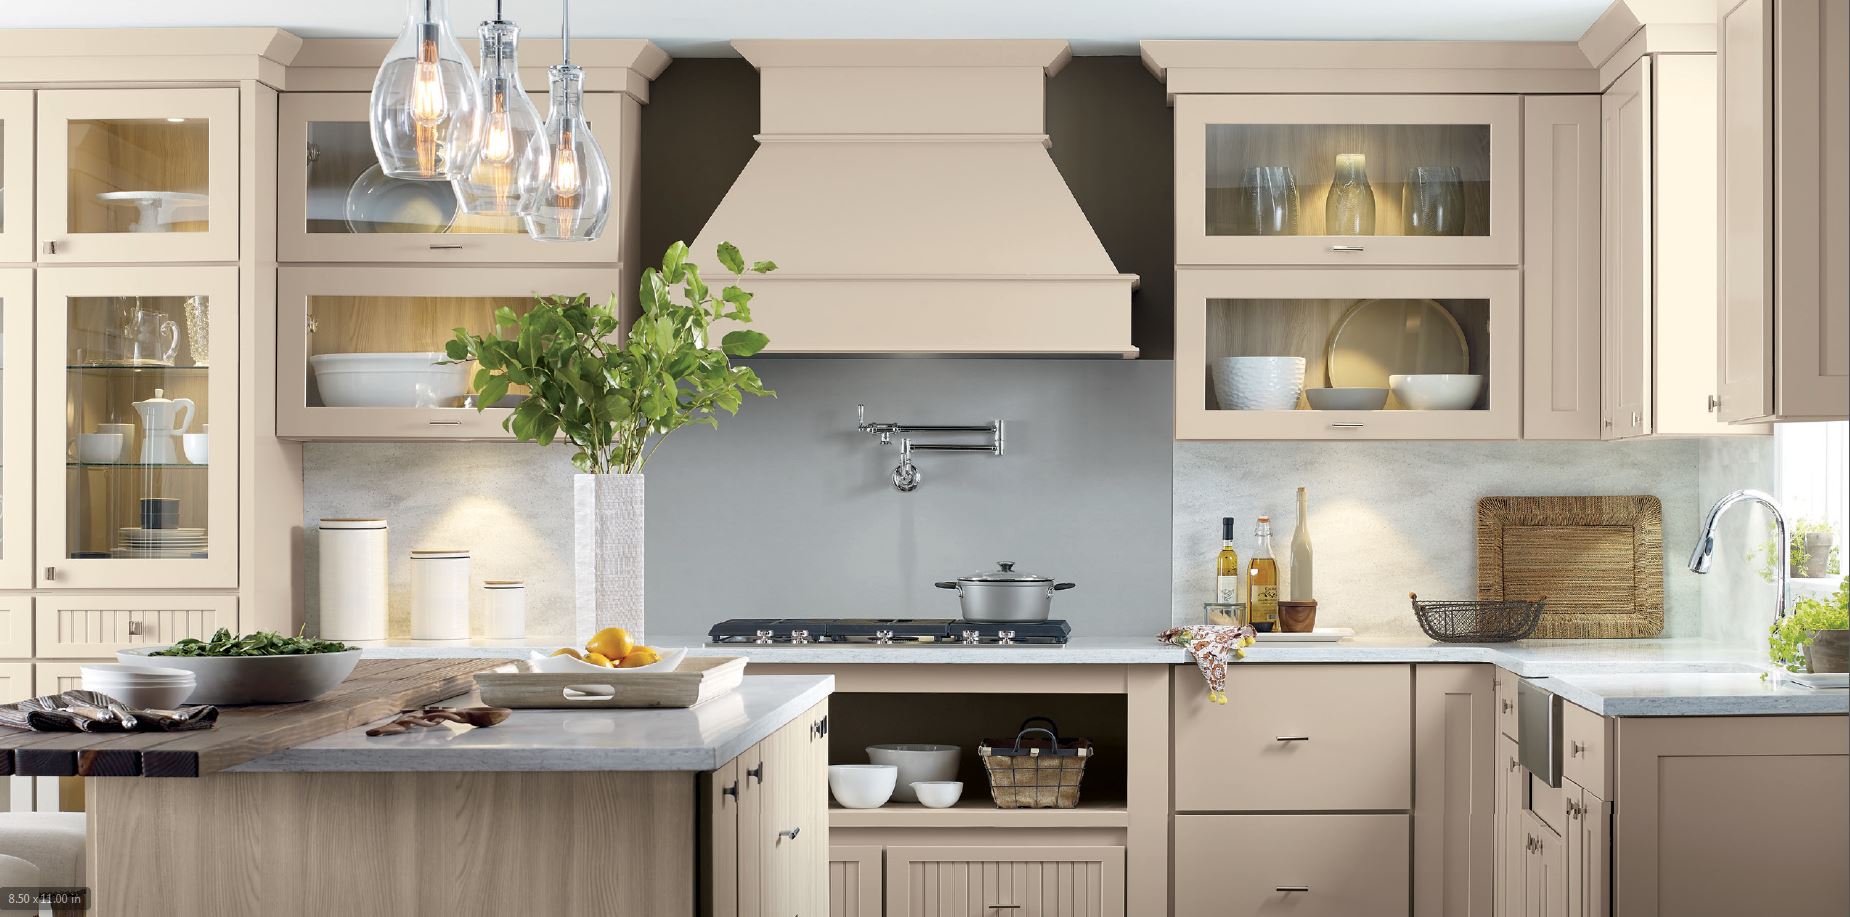 Two Tone Kitchen Cabinets Kitchen With Island Nj Kitchen Design Ideas